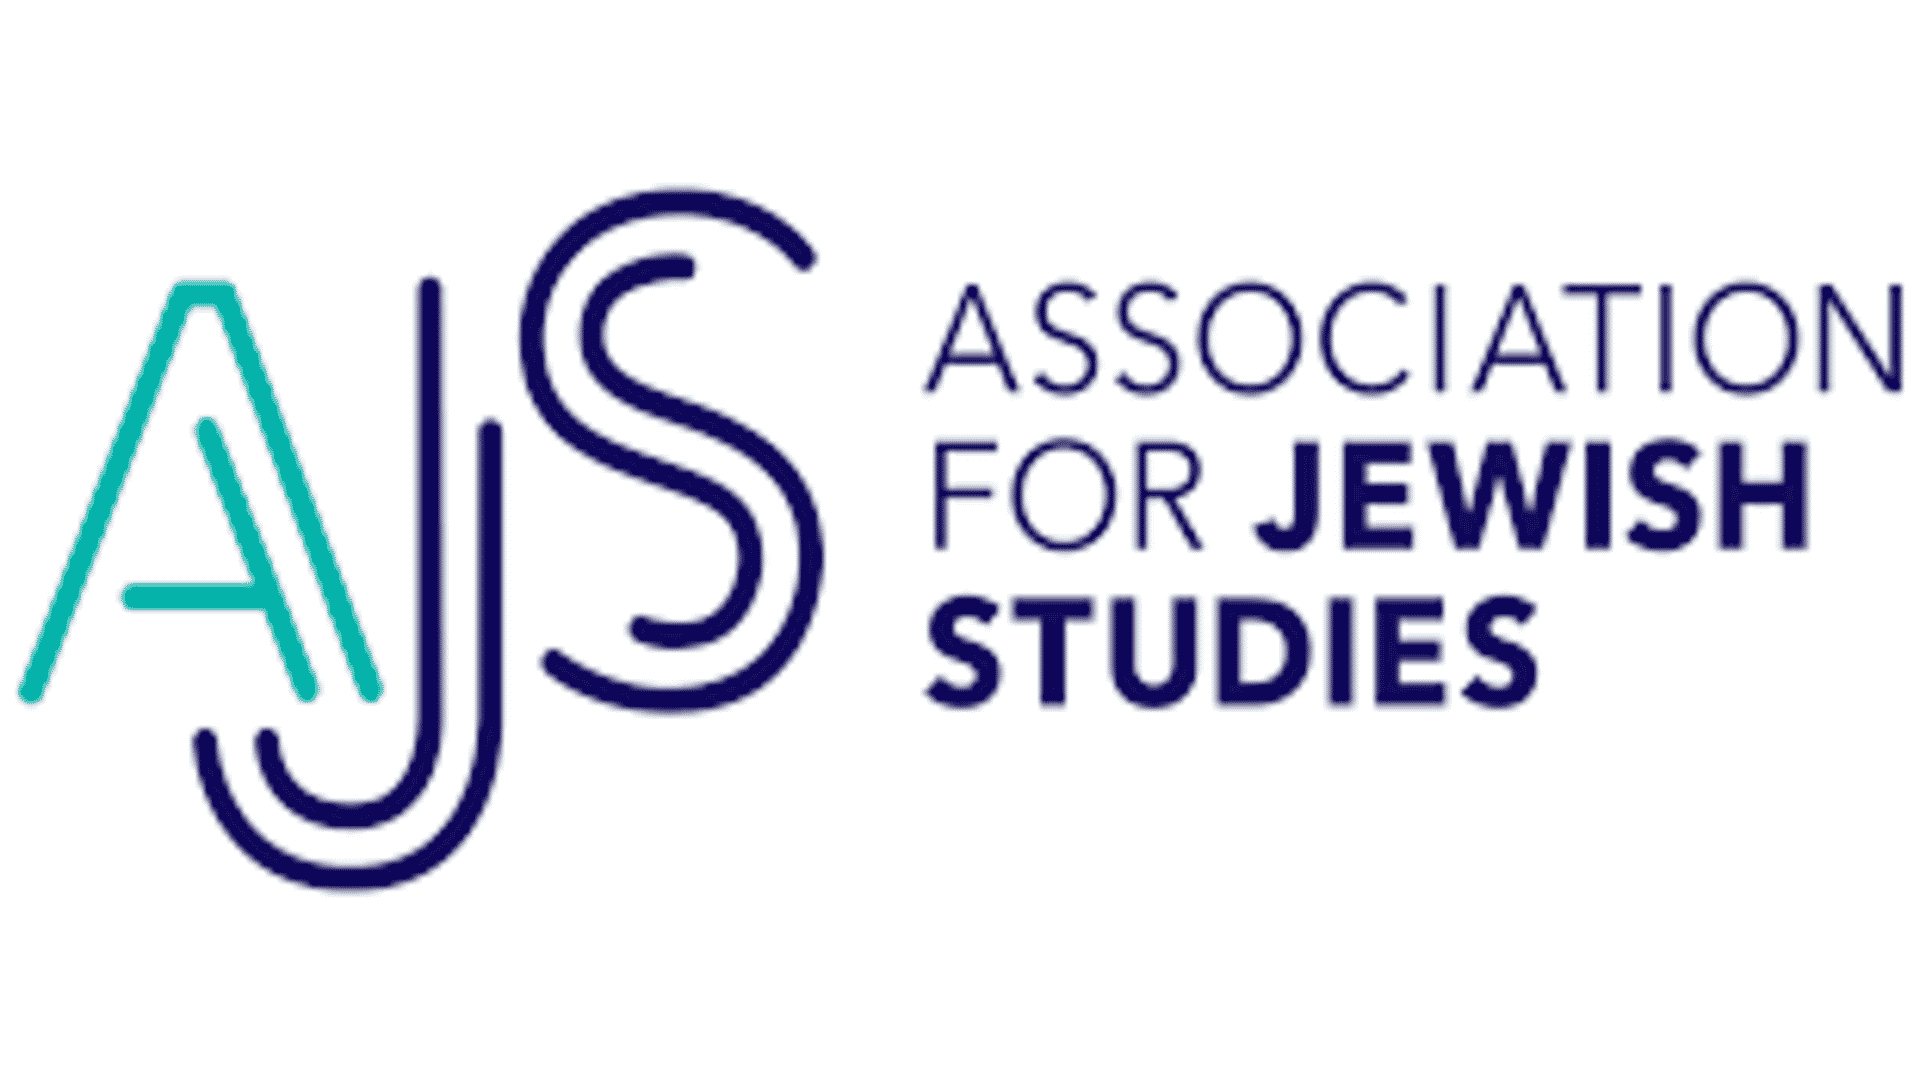 AJS: Association for Jewish Studies